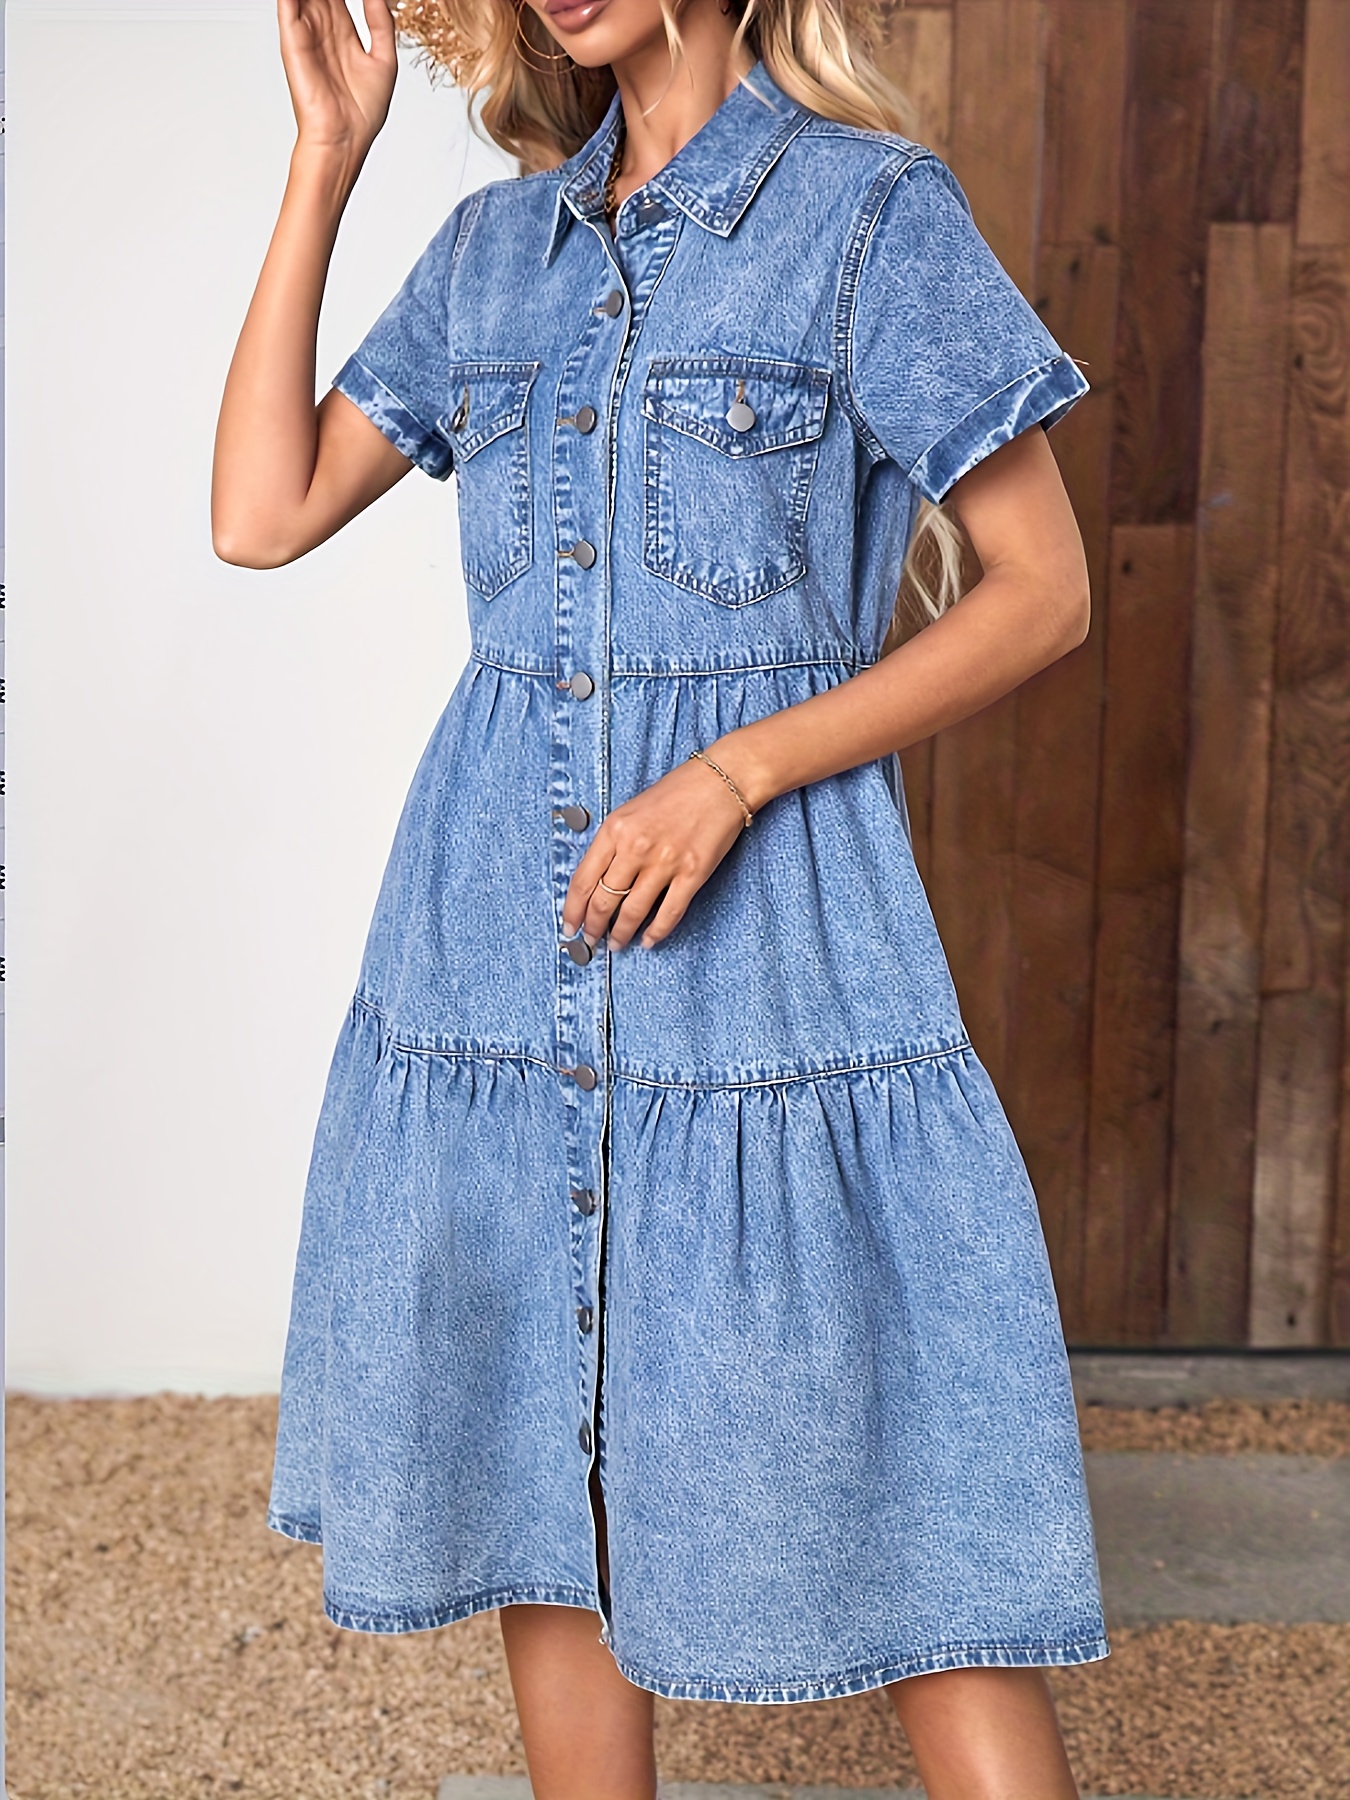 Smiling Girl Wearing Jeans Dress Hiding Stock Photo 7257241 | Shutterstock-sonthuy.vn